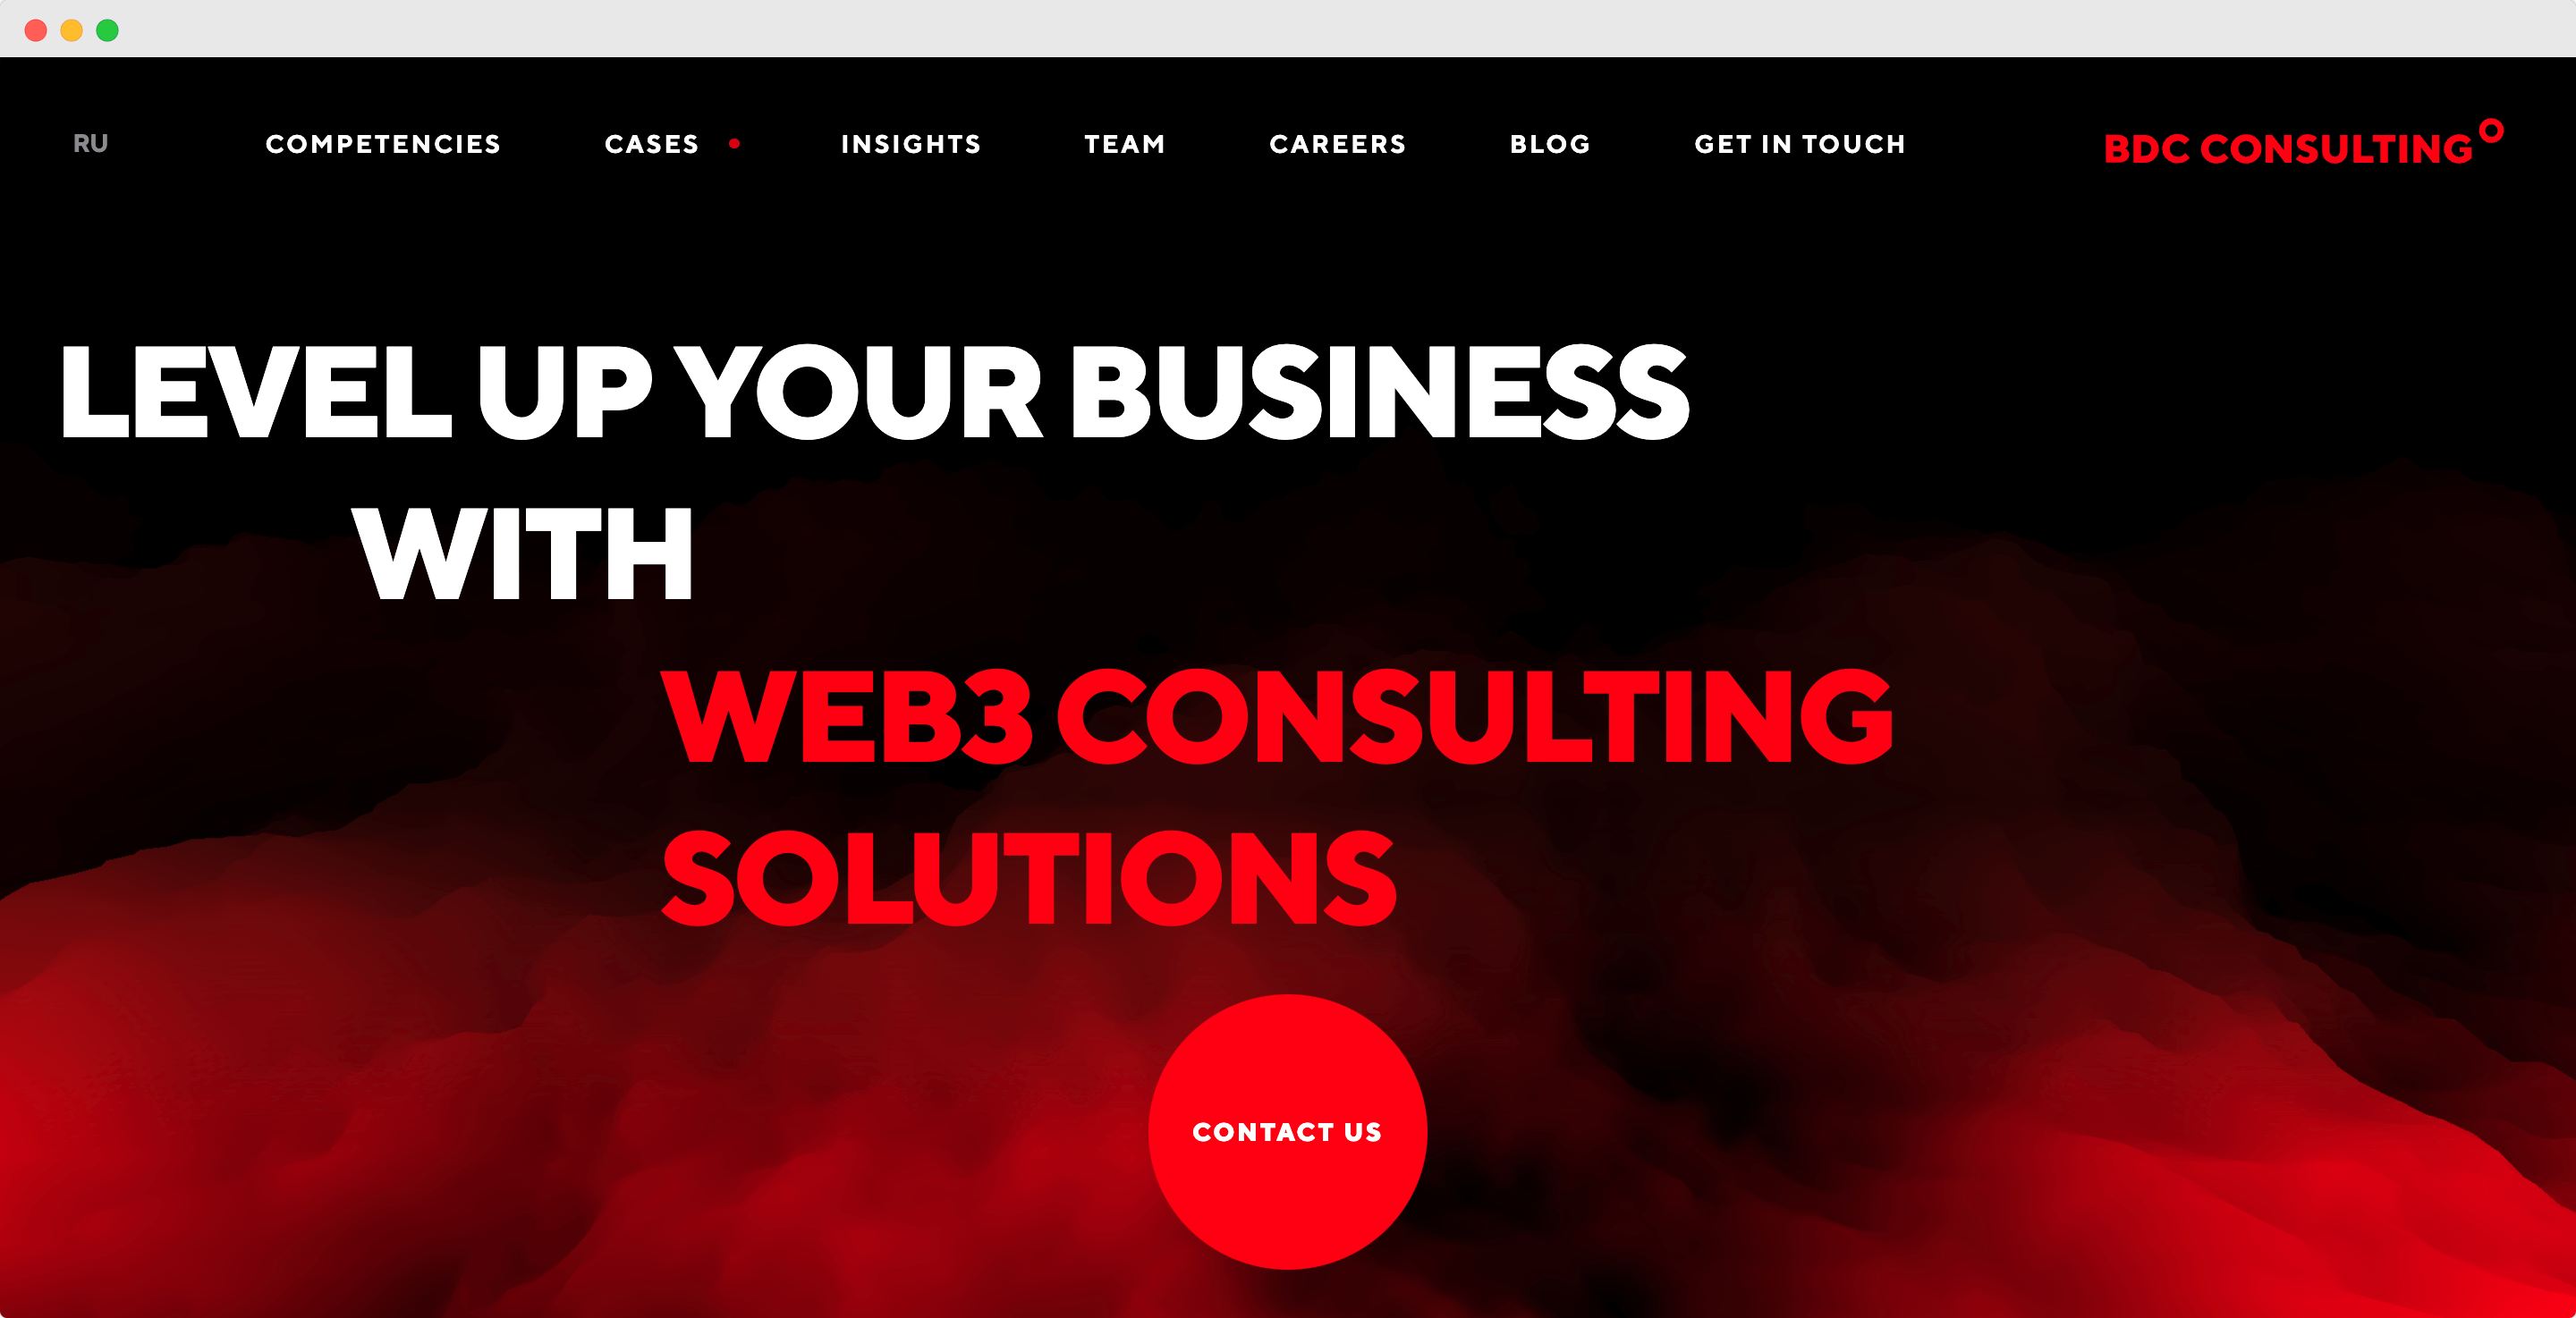 BDC-Consulting homepage screenshot